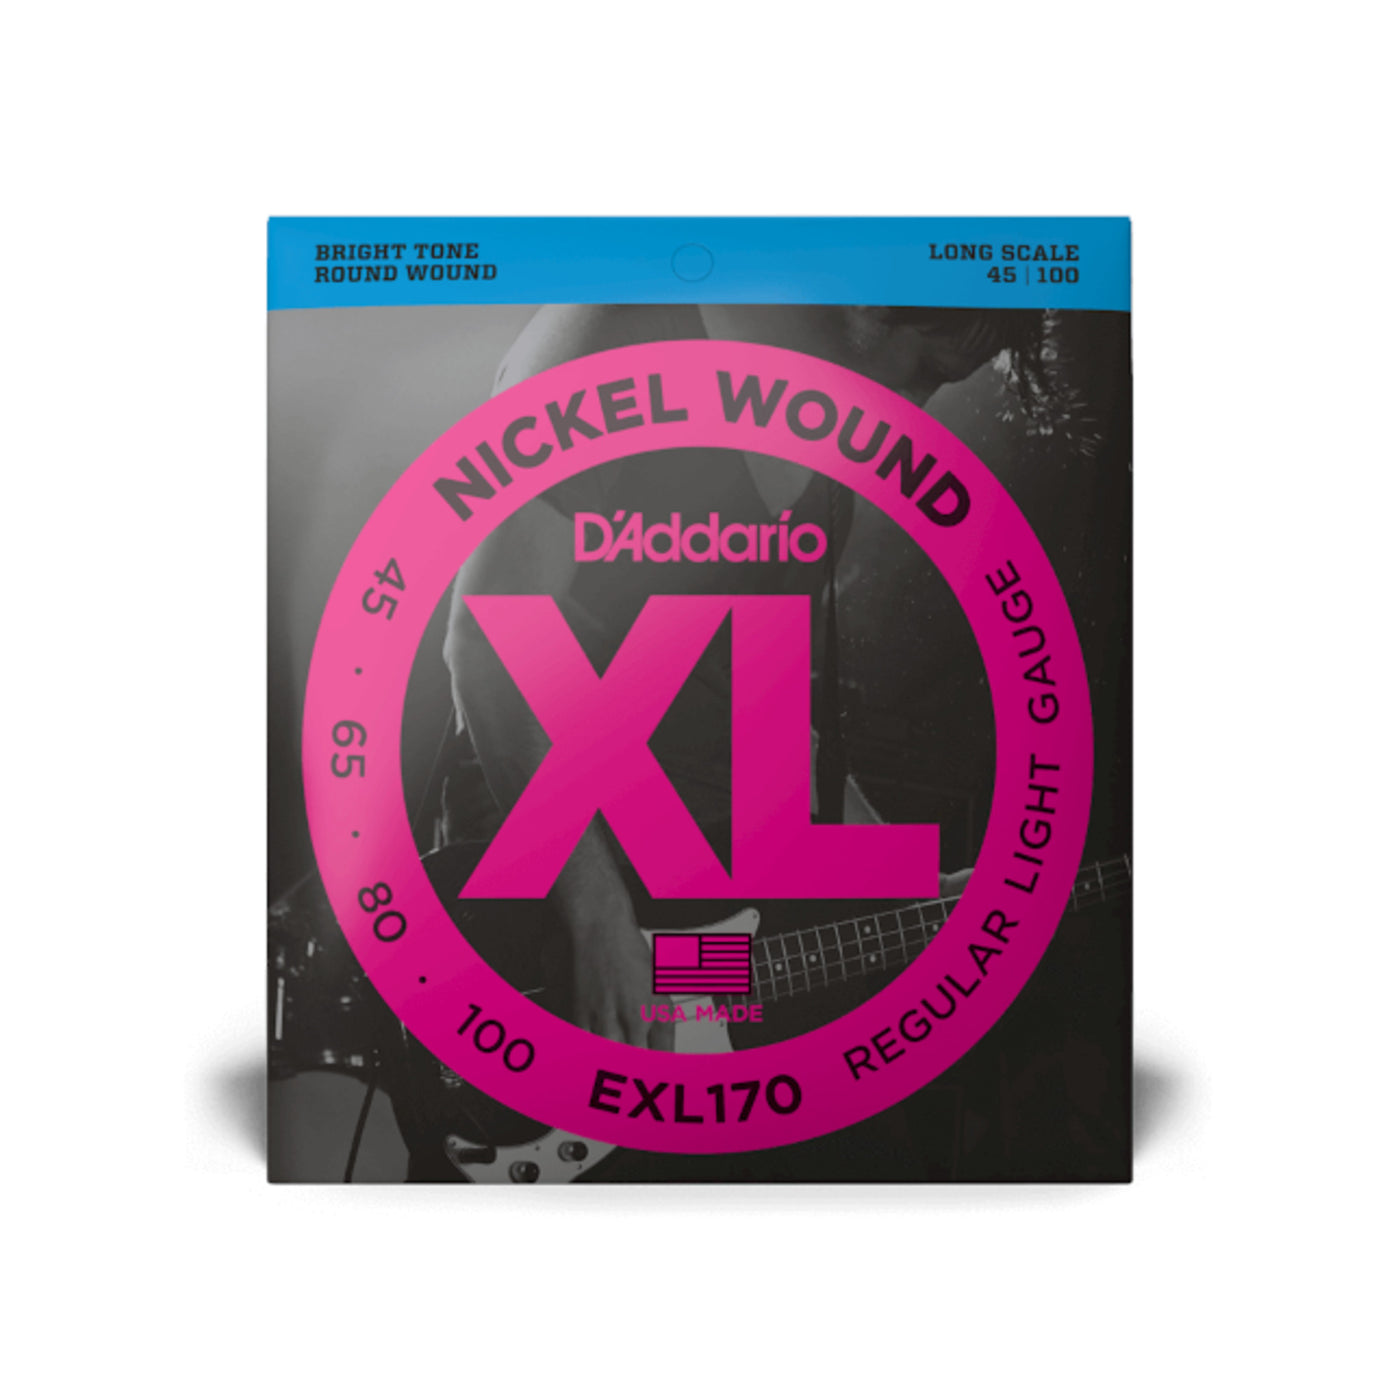 D'Addario Nickel Wound Bass Guitar Strings, Light, 45-100, Long Scale (EXL170)